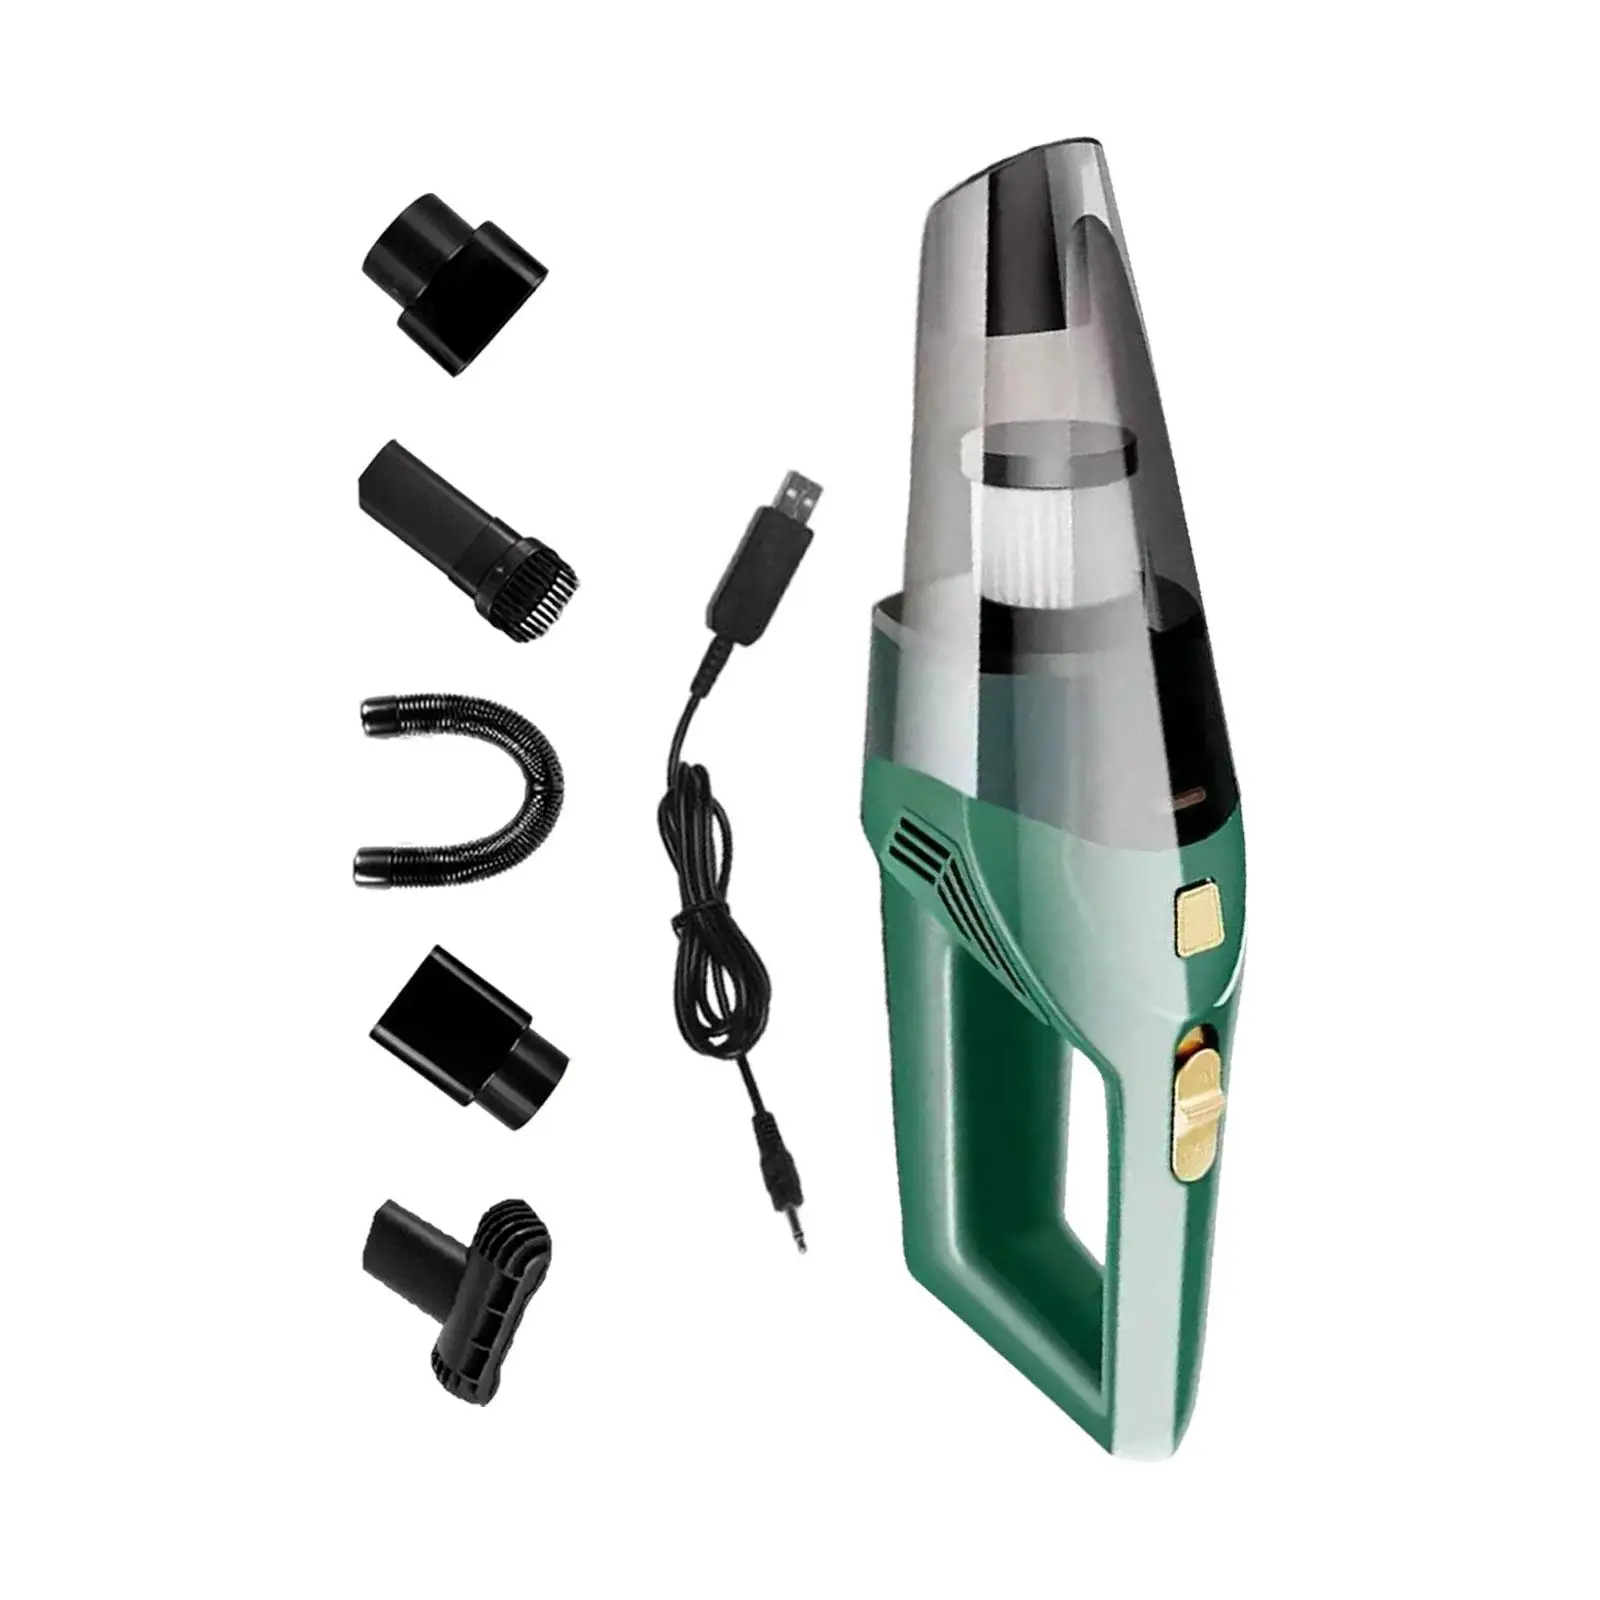 Handheld Car Vacuum Cleaner 120W 12V Powerful Handheld Vacuum Wet and Dry Using